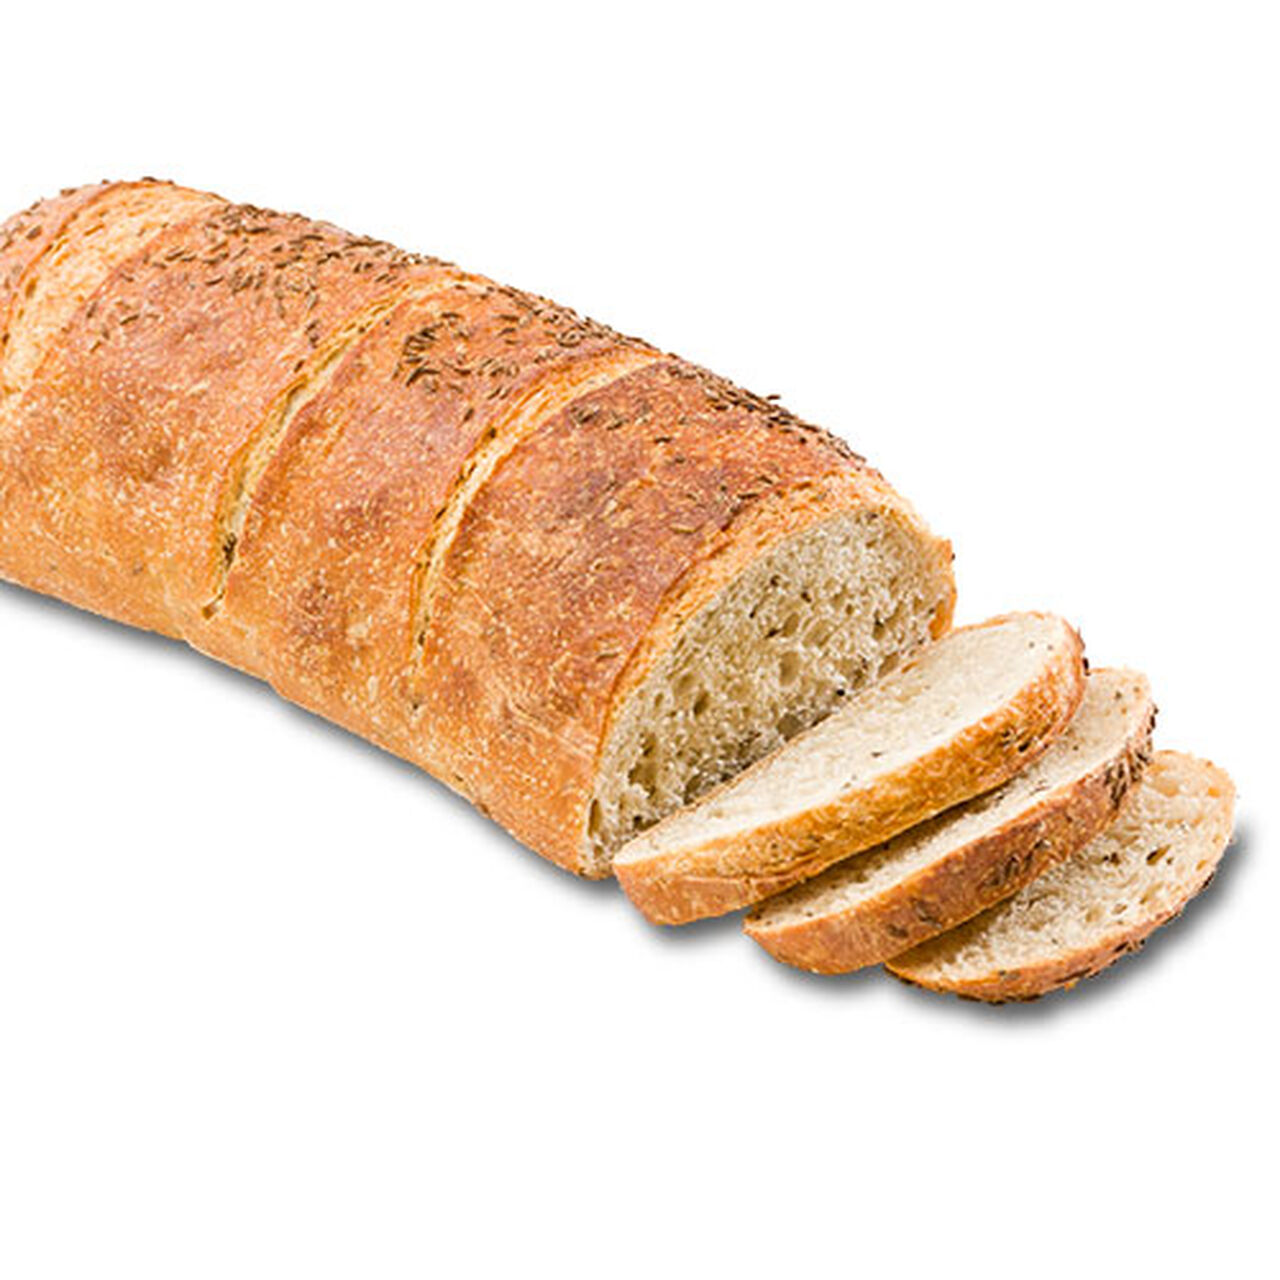 Zabar's Signature Sourdough Rye Bread - Whole, , large image number 0